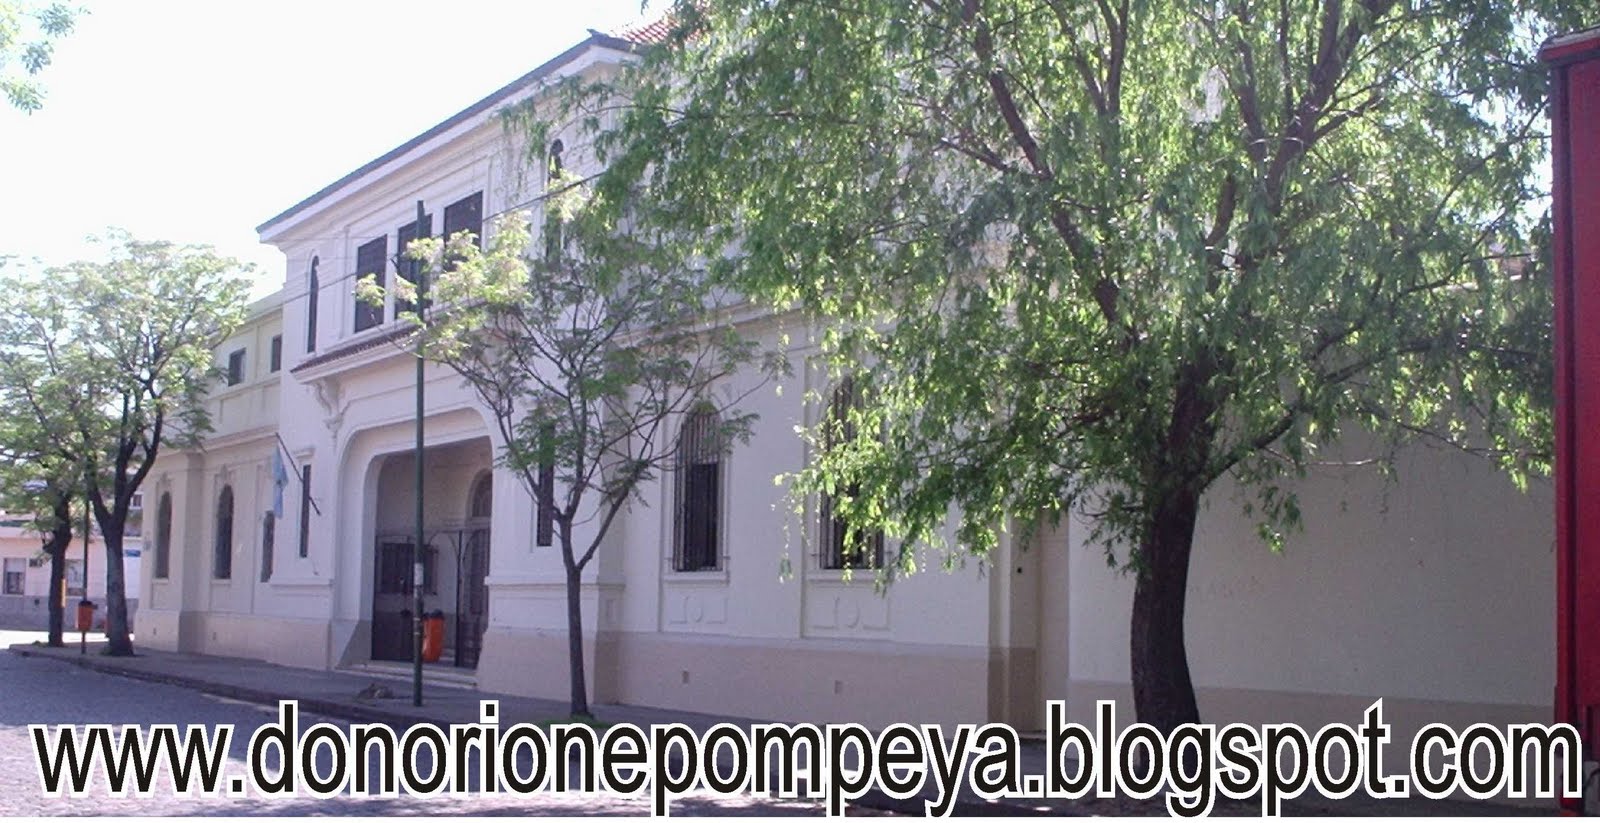 Don Orione Pompeya